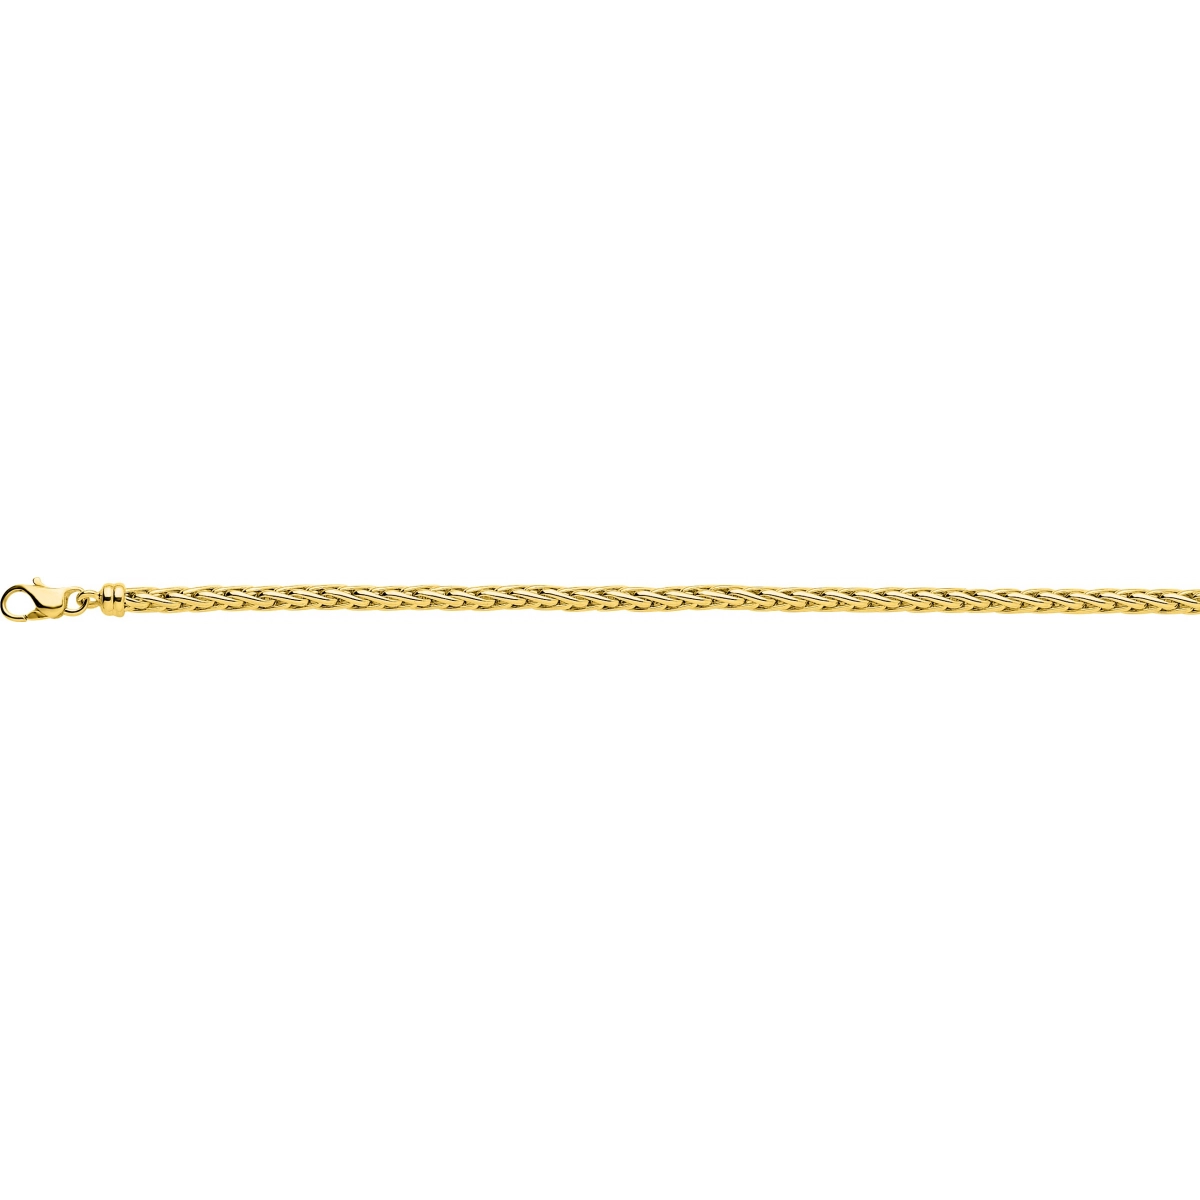 Bracelet 'palm chain' hollow 18K YG - Size: 45  Lua Blanca  2305.45